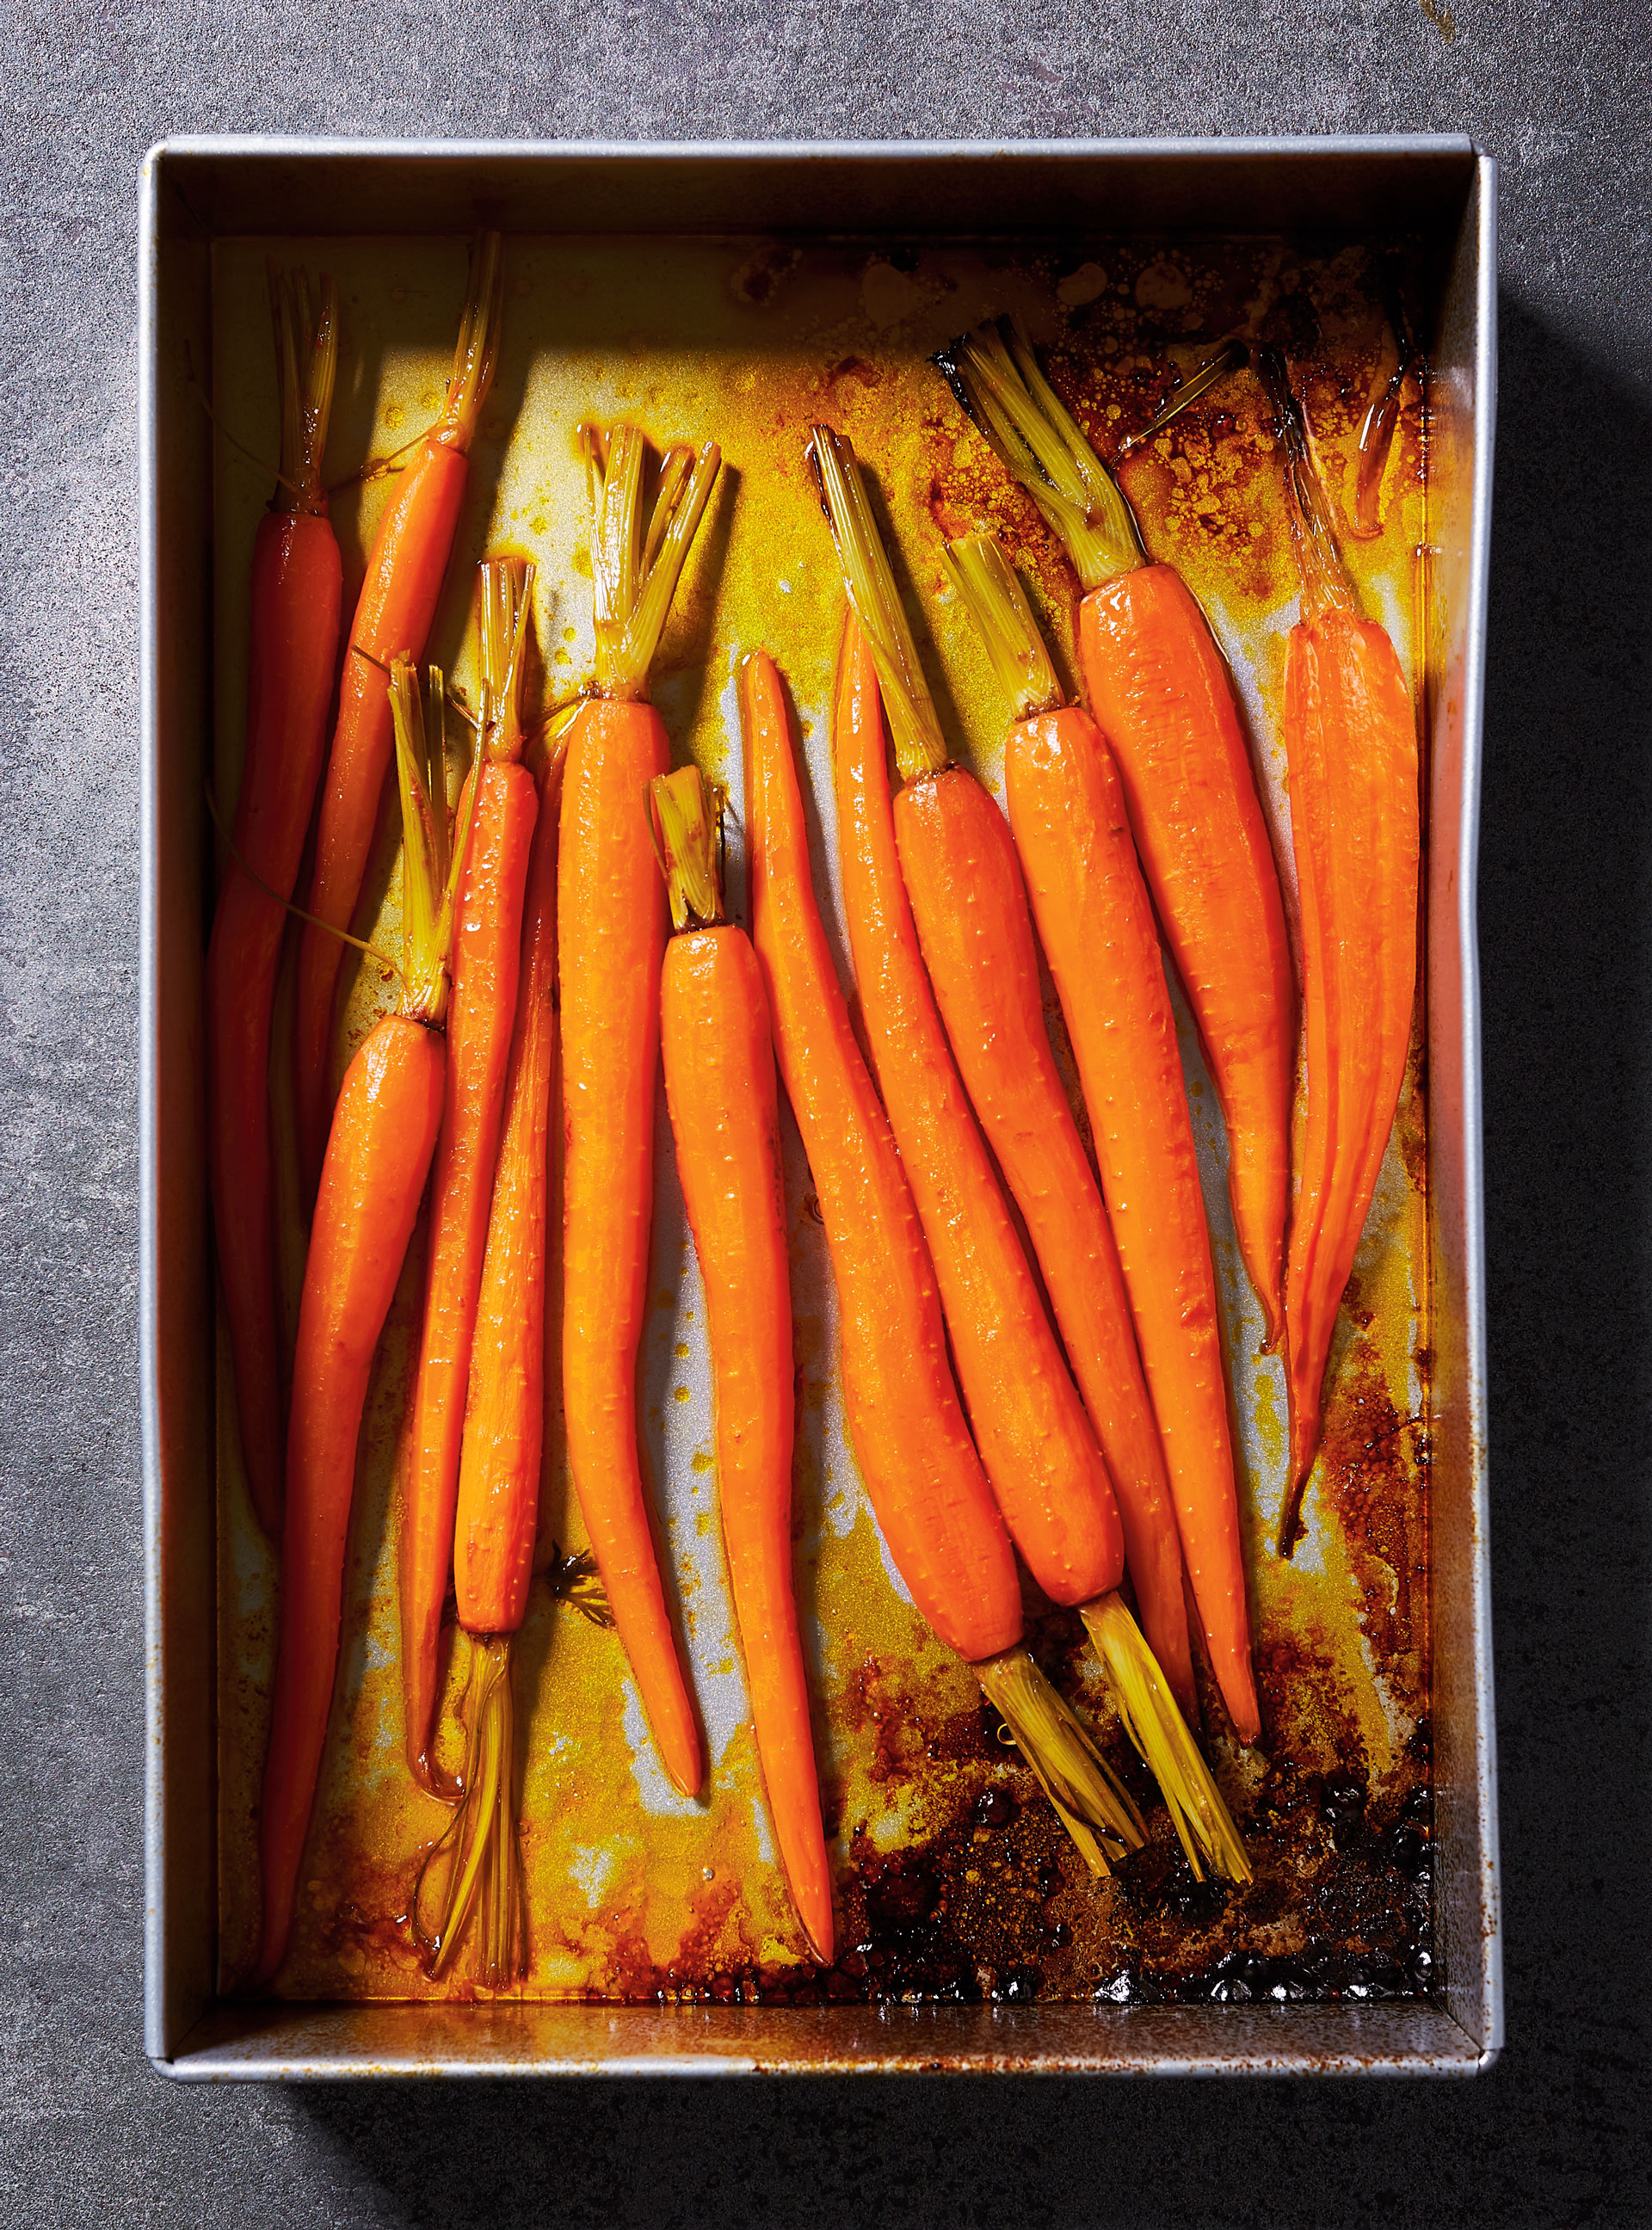 Carottes rôties au jus de carottes